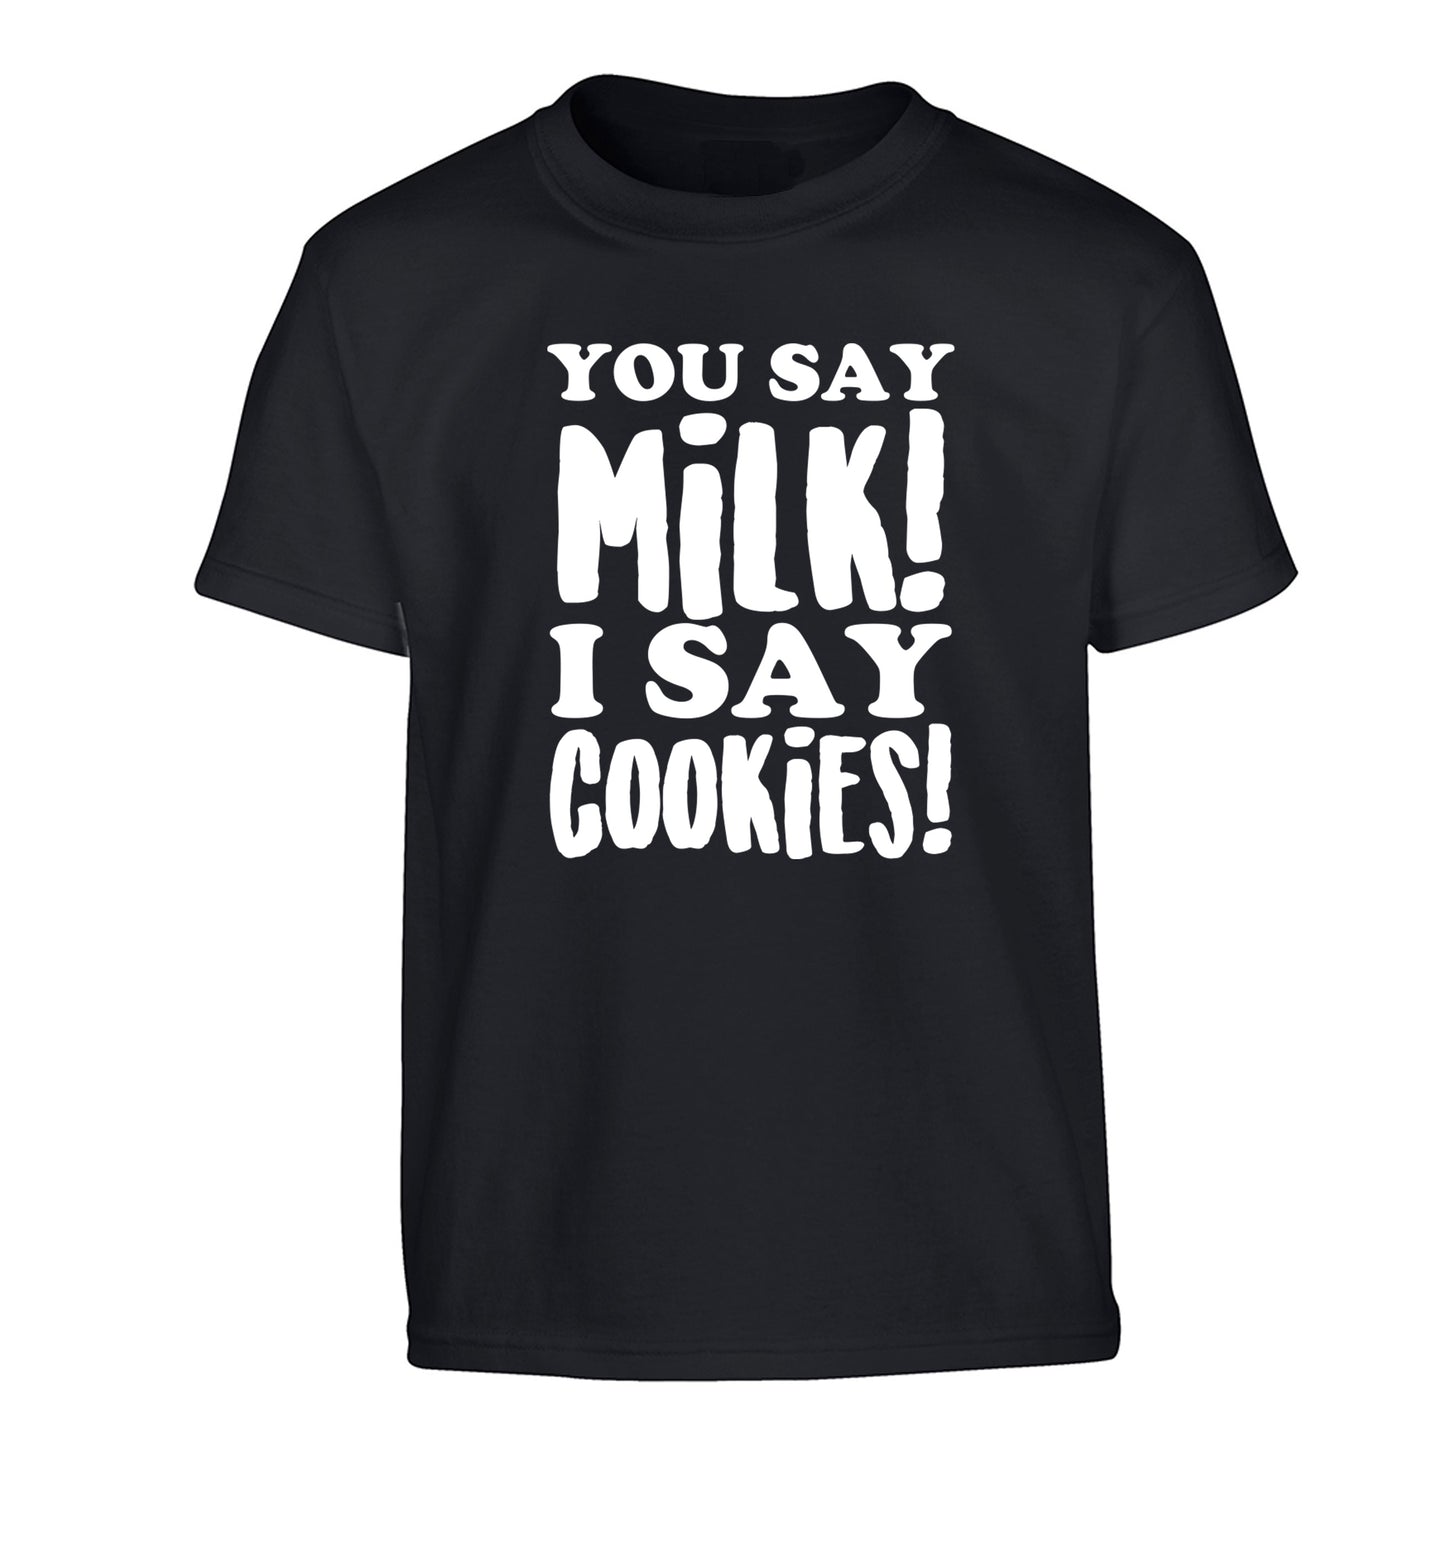 You say milk I say cookies! Children's black Tshirt 12-14 Years